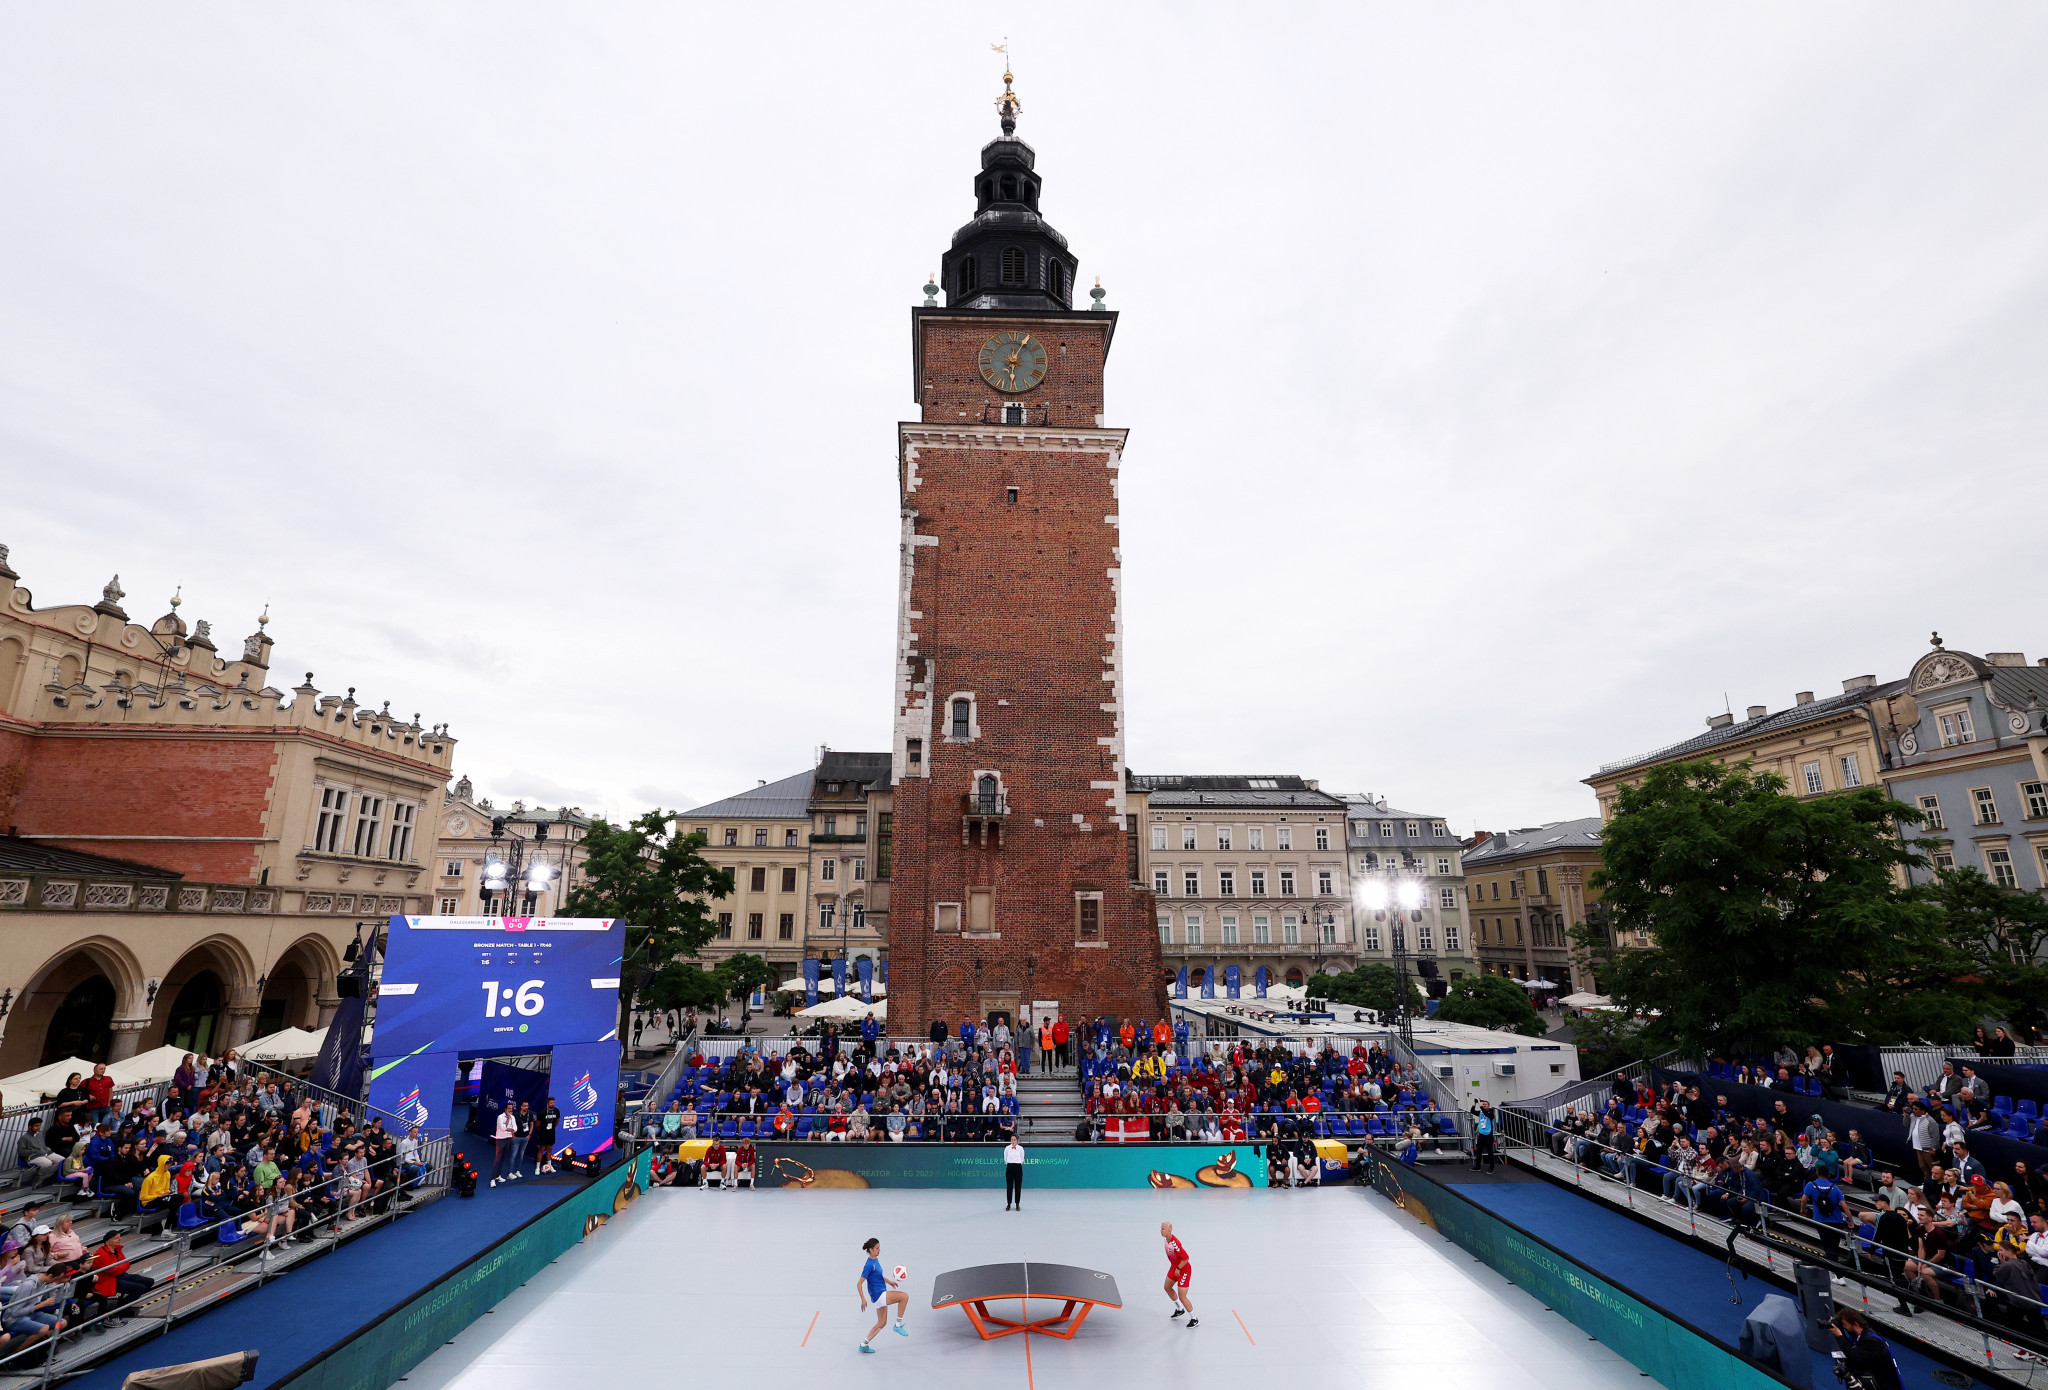 Kraków-Małopolska 2023 claims European Games helped boost region's tourist numbers